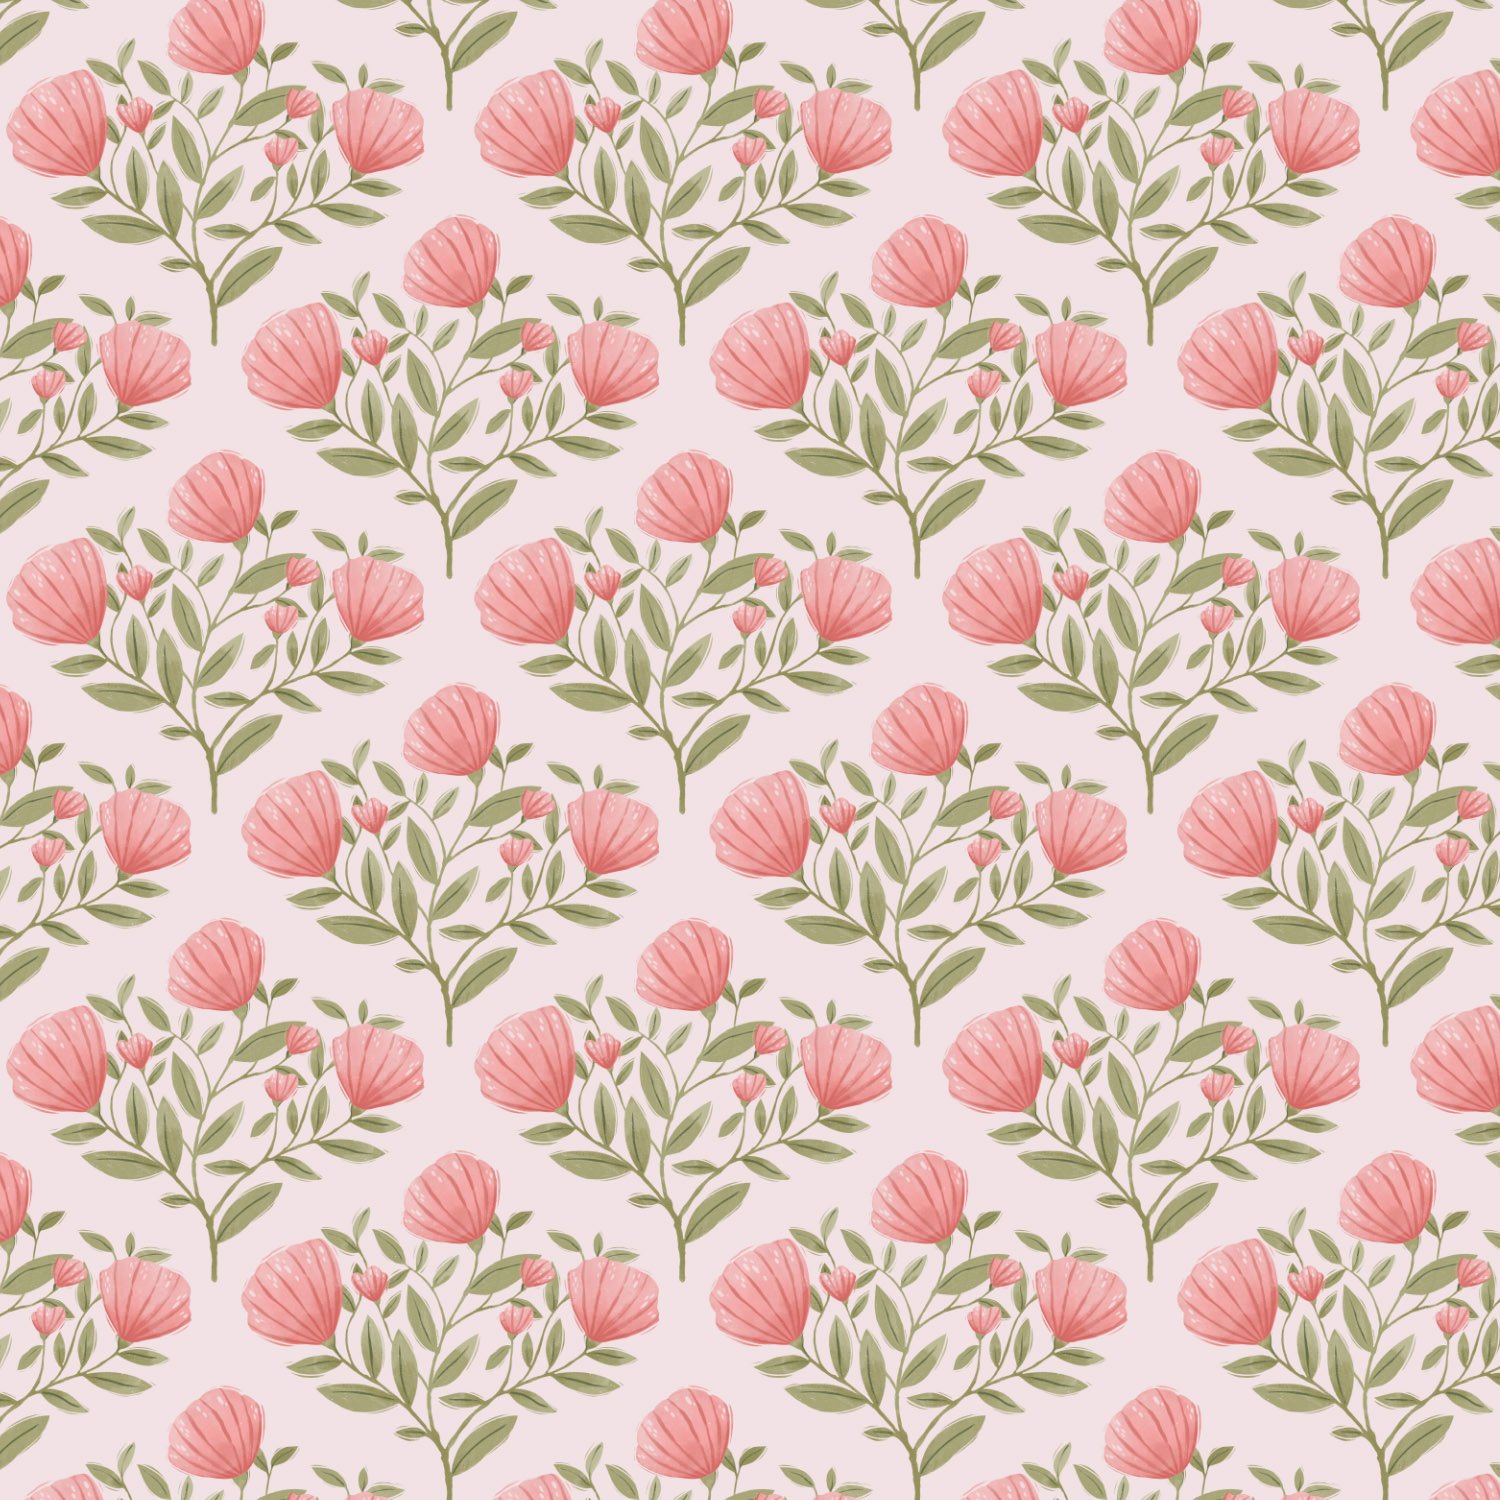 5x5 Sample - Lovely Pink Blooms.jpg